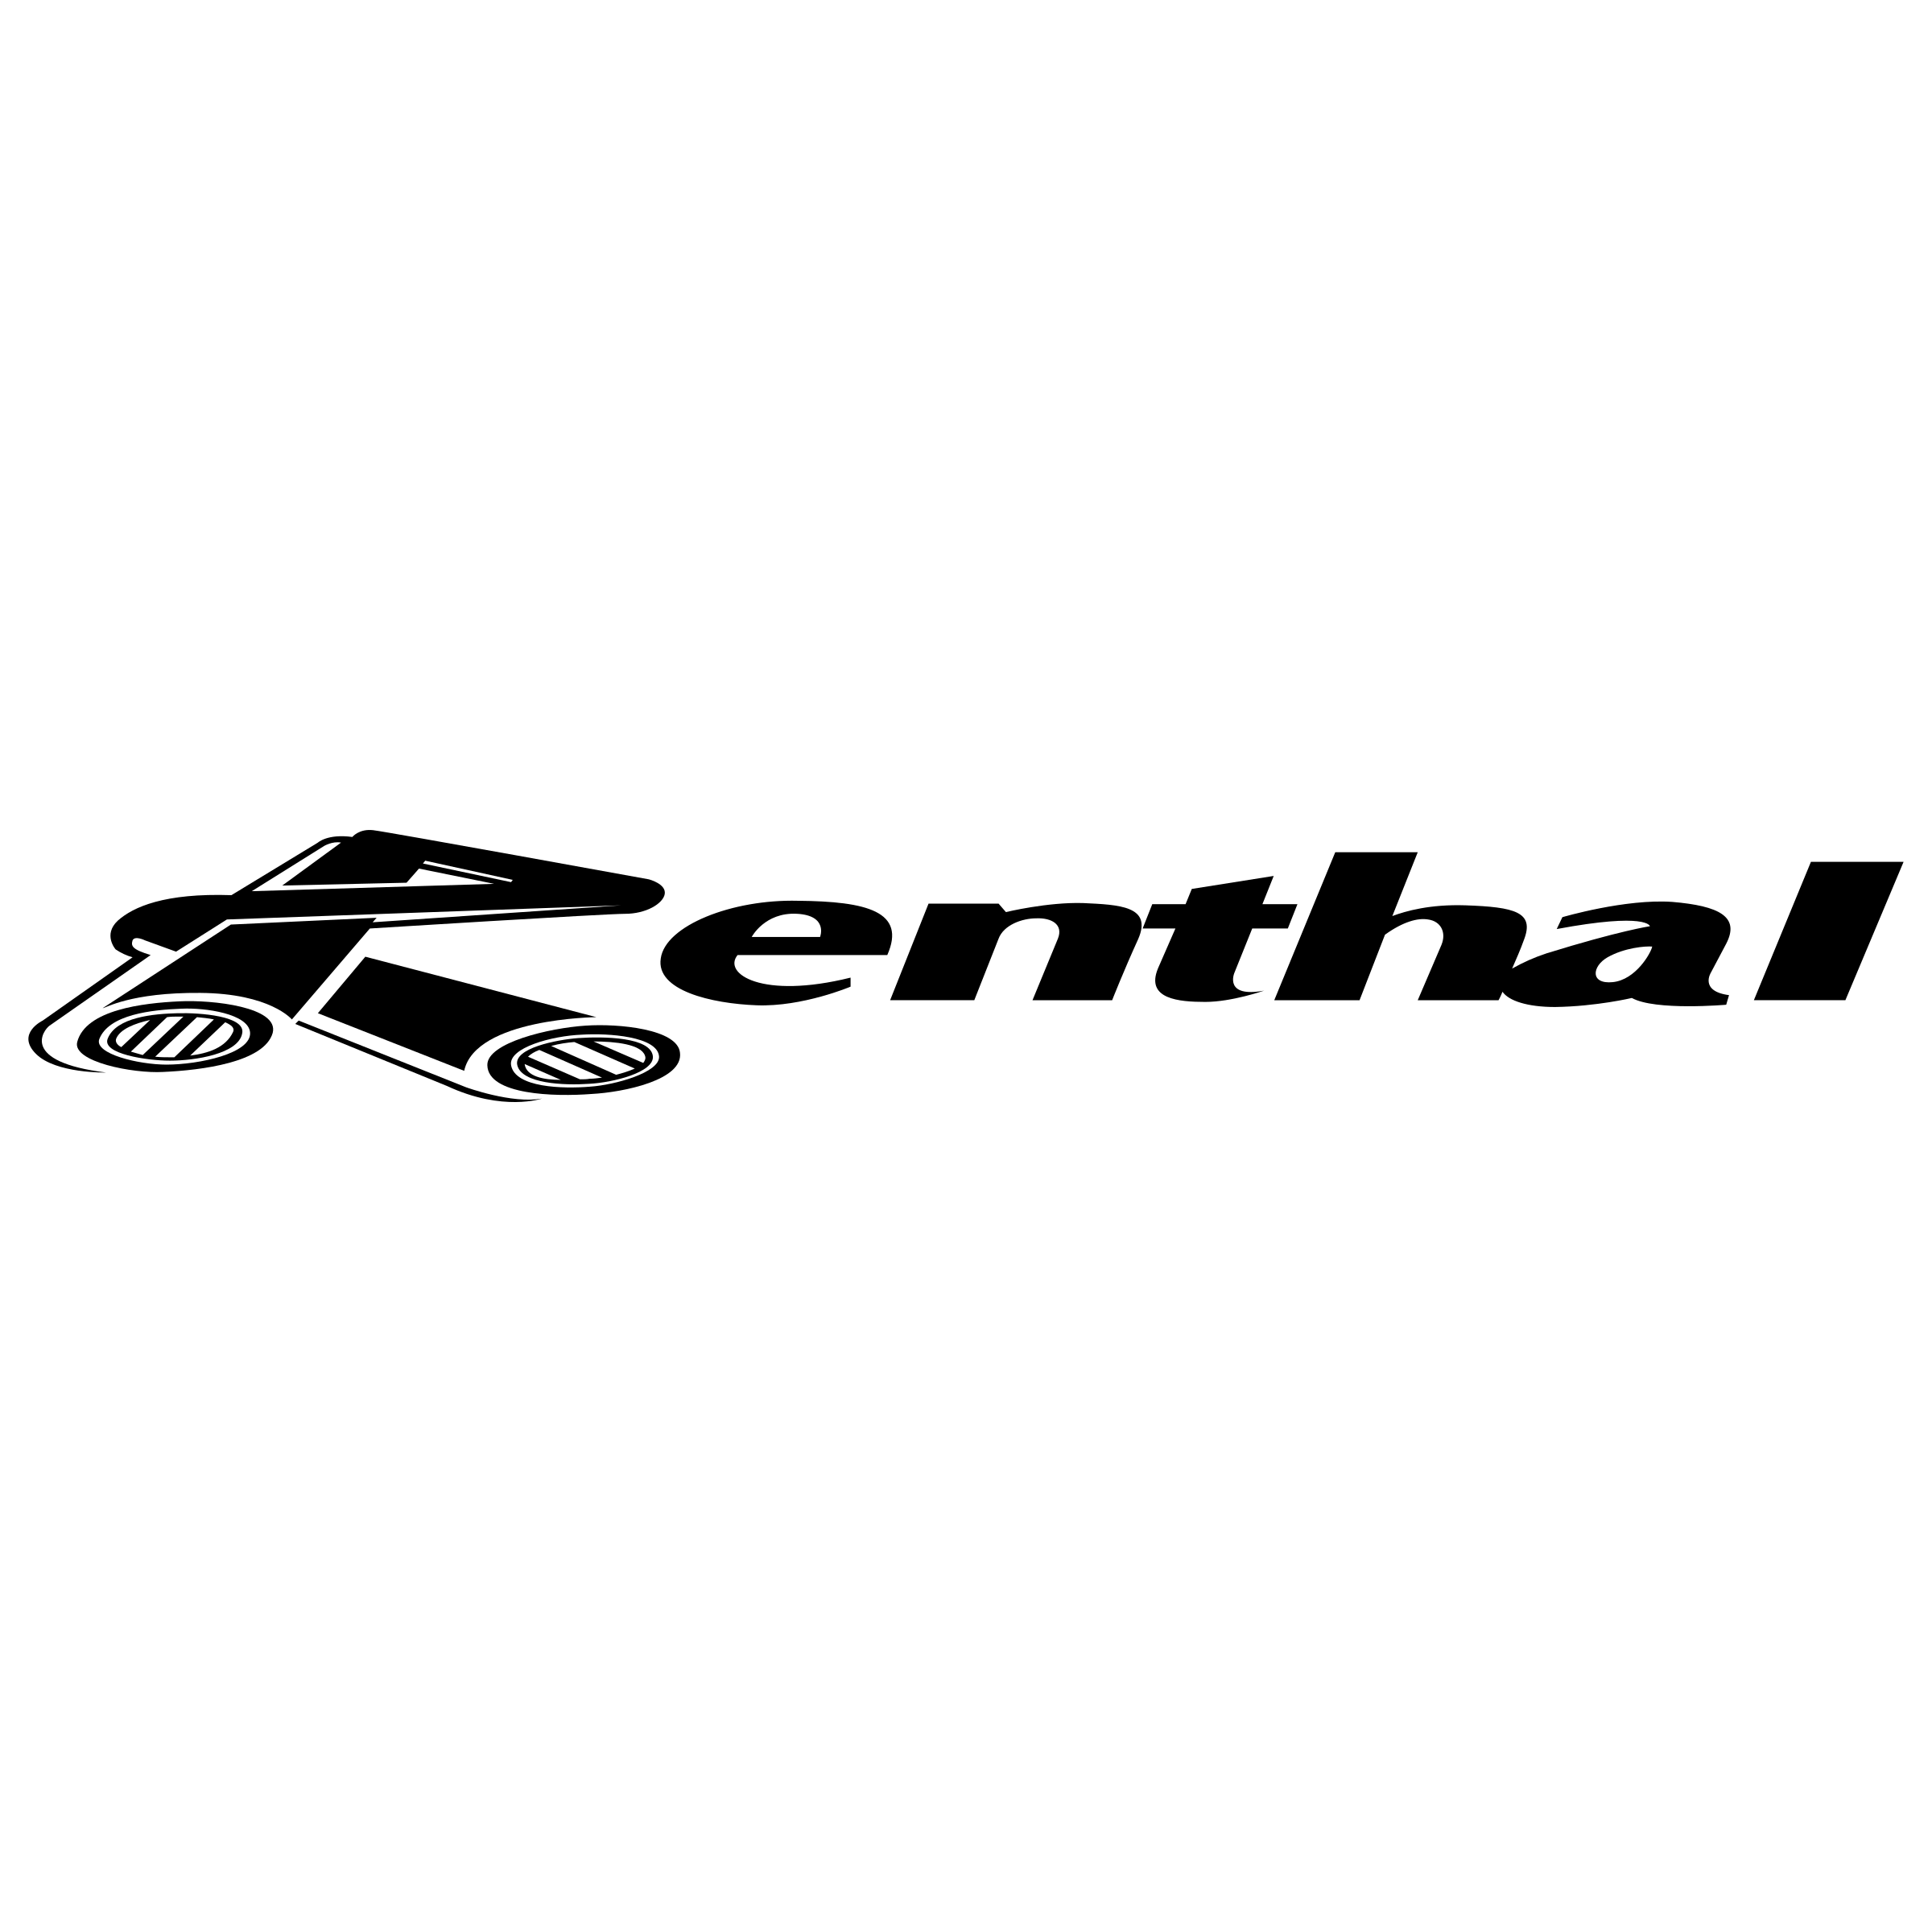 Renthal Logo - Renthal Logo PNG Transparent & SVG Vector - Freebie Supply